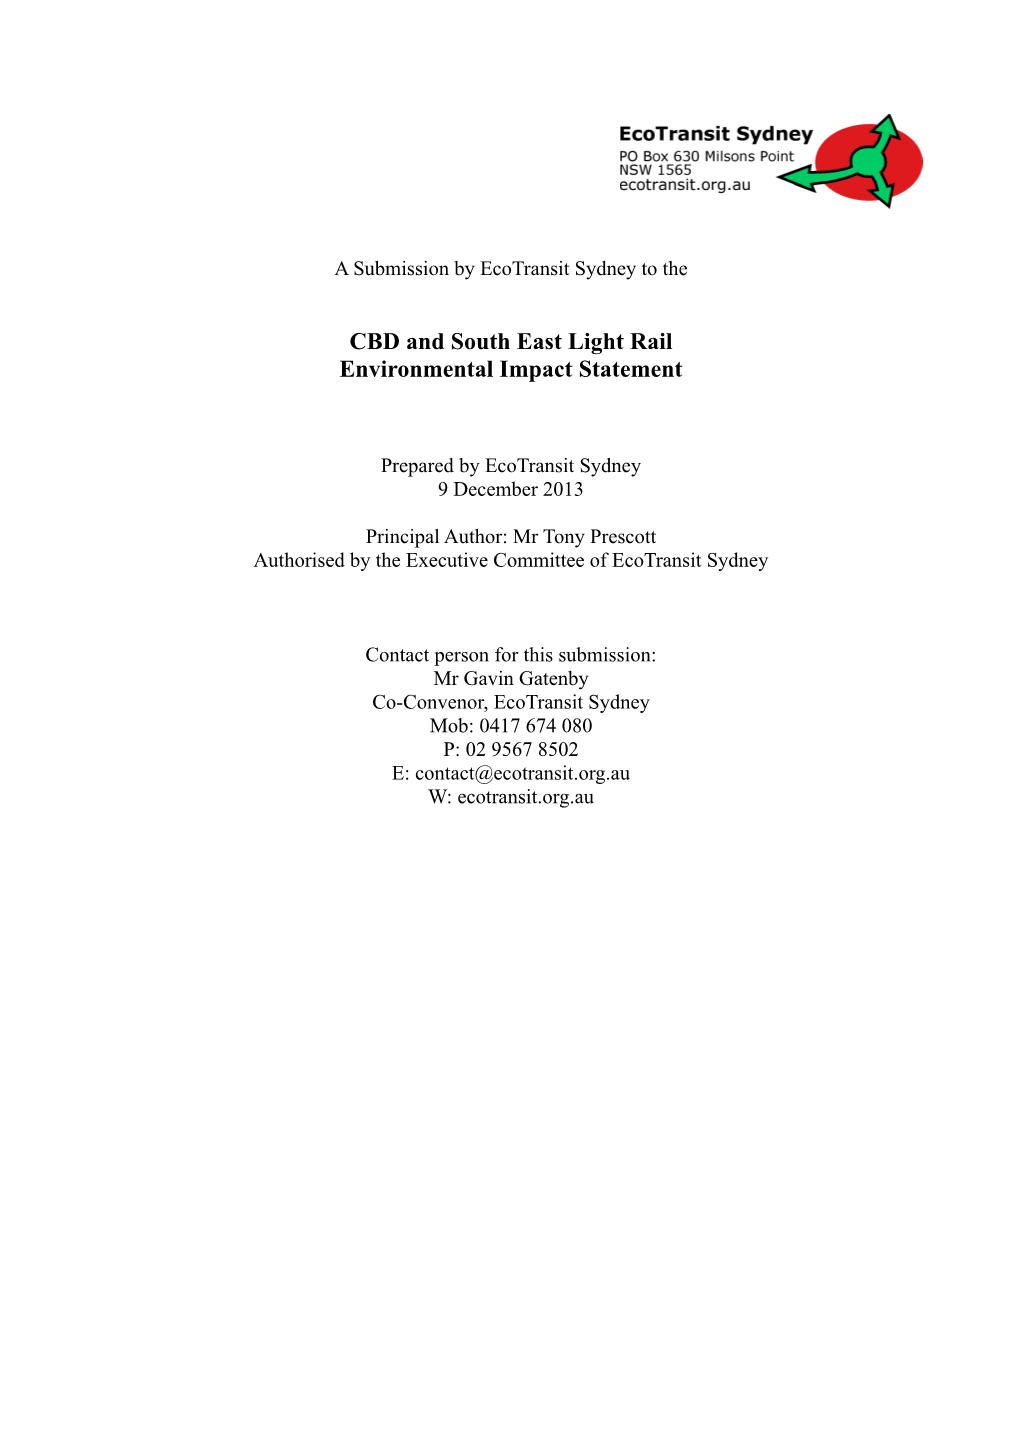 CBD and South East Light Rail Environmental Impact Statement